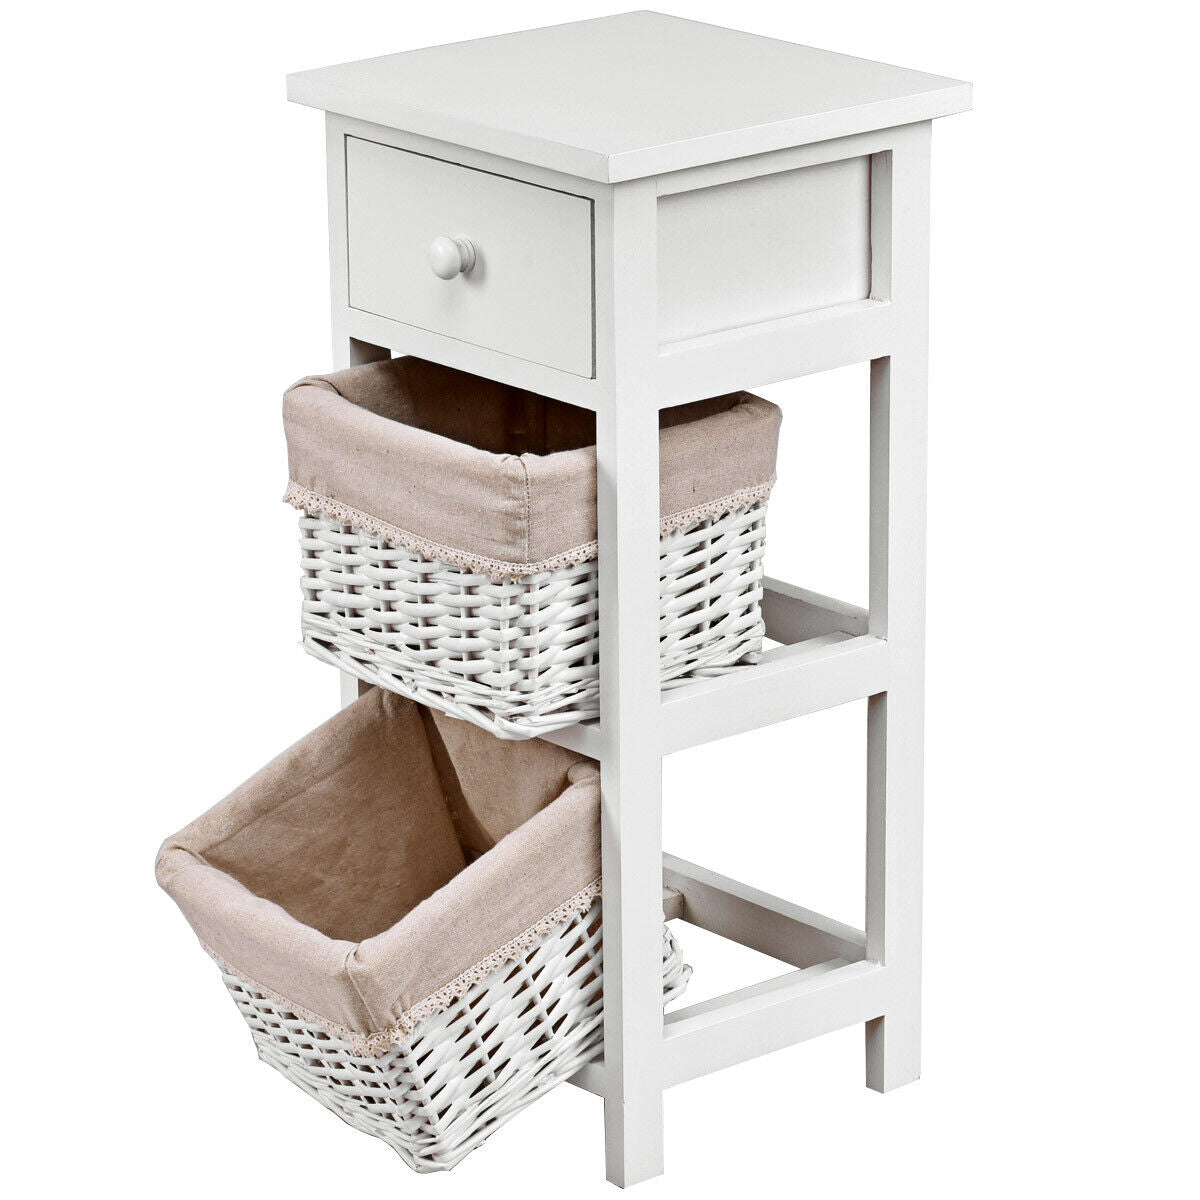 2PCS End Bedside Table Nightstand Chest Cabinet Bedroom Drawer Baskets